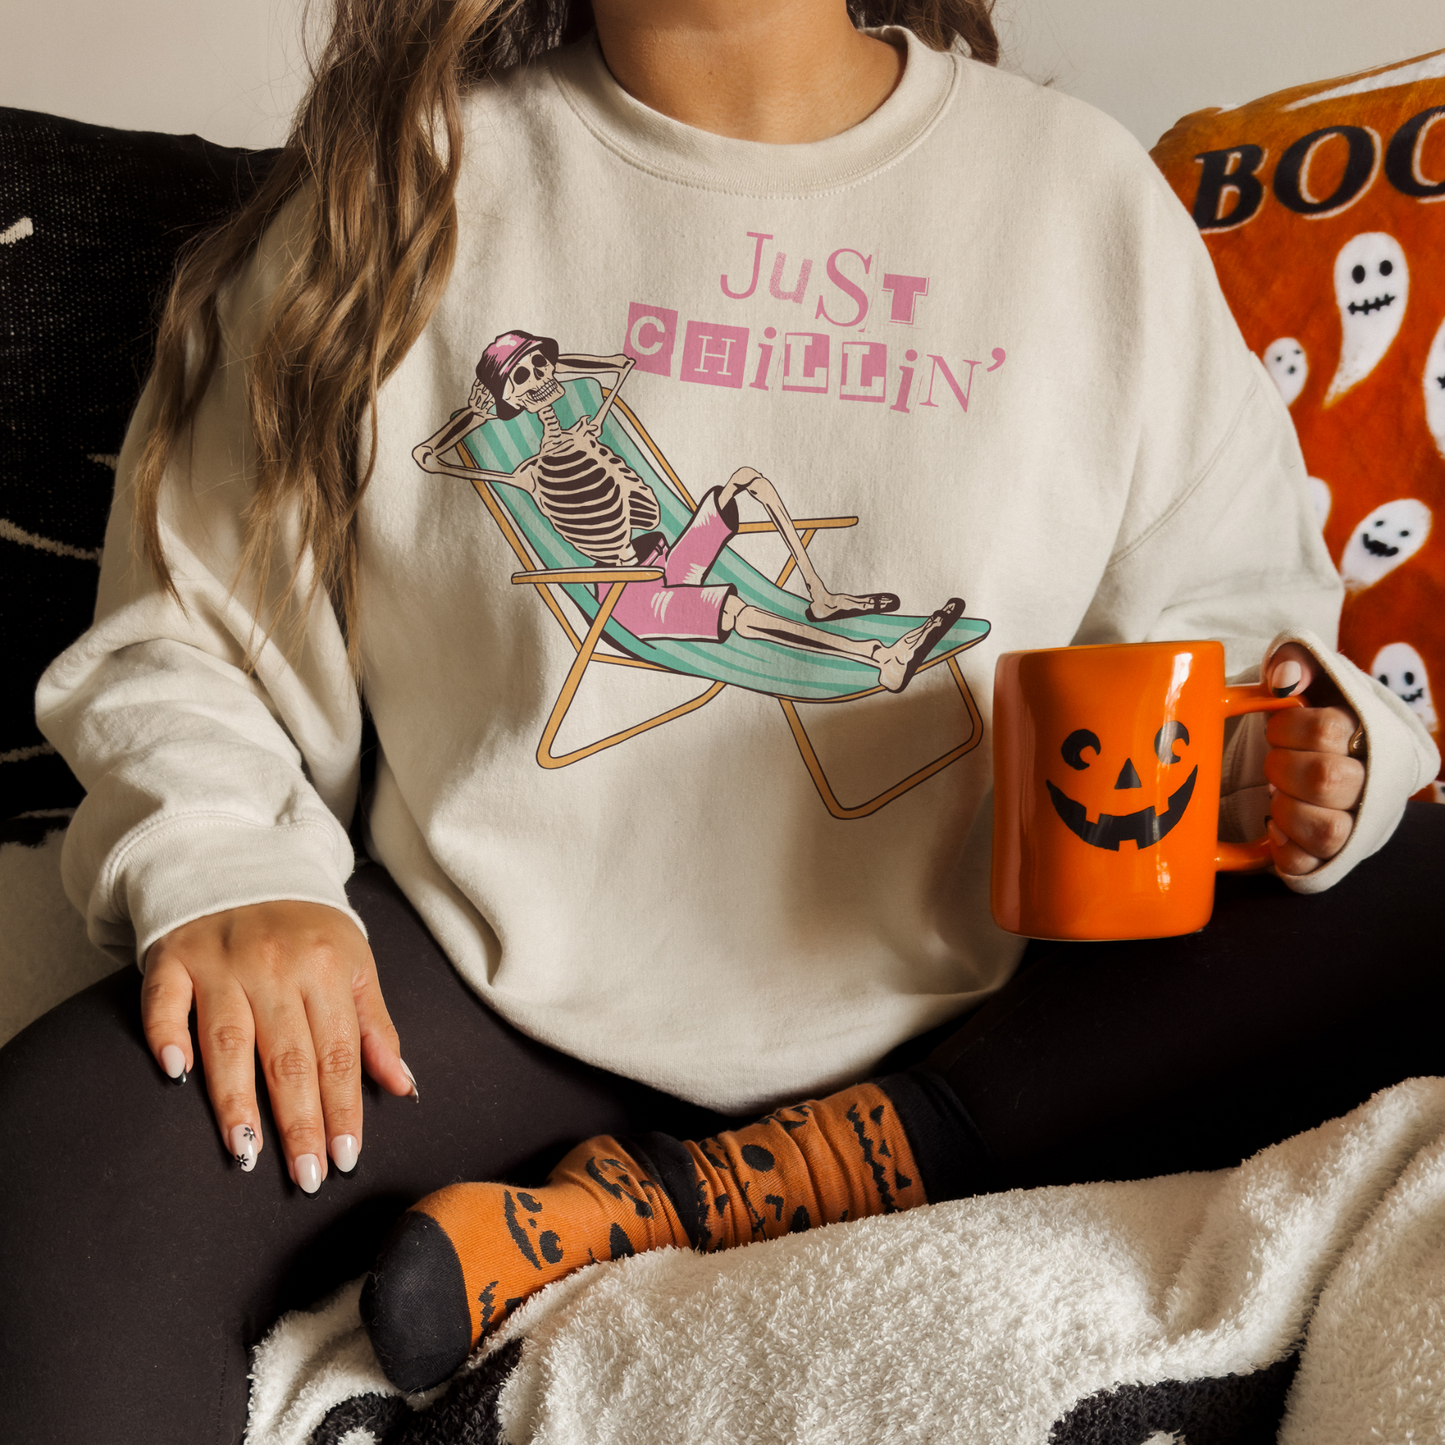 Spooky Lounger Halloween Sweatshirt